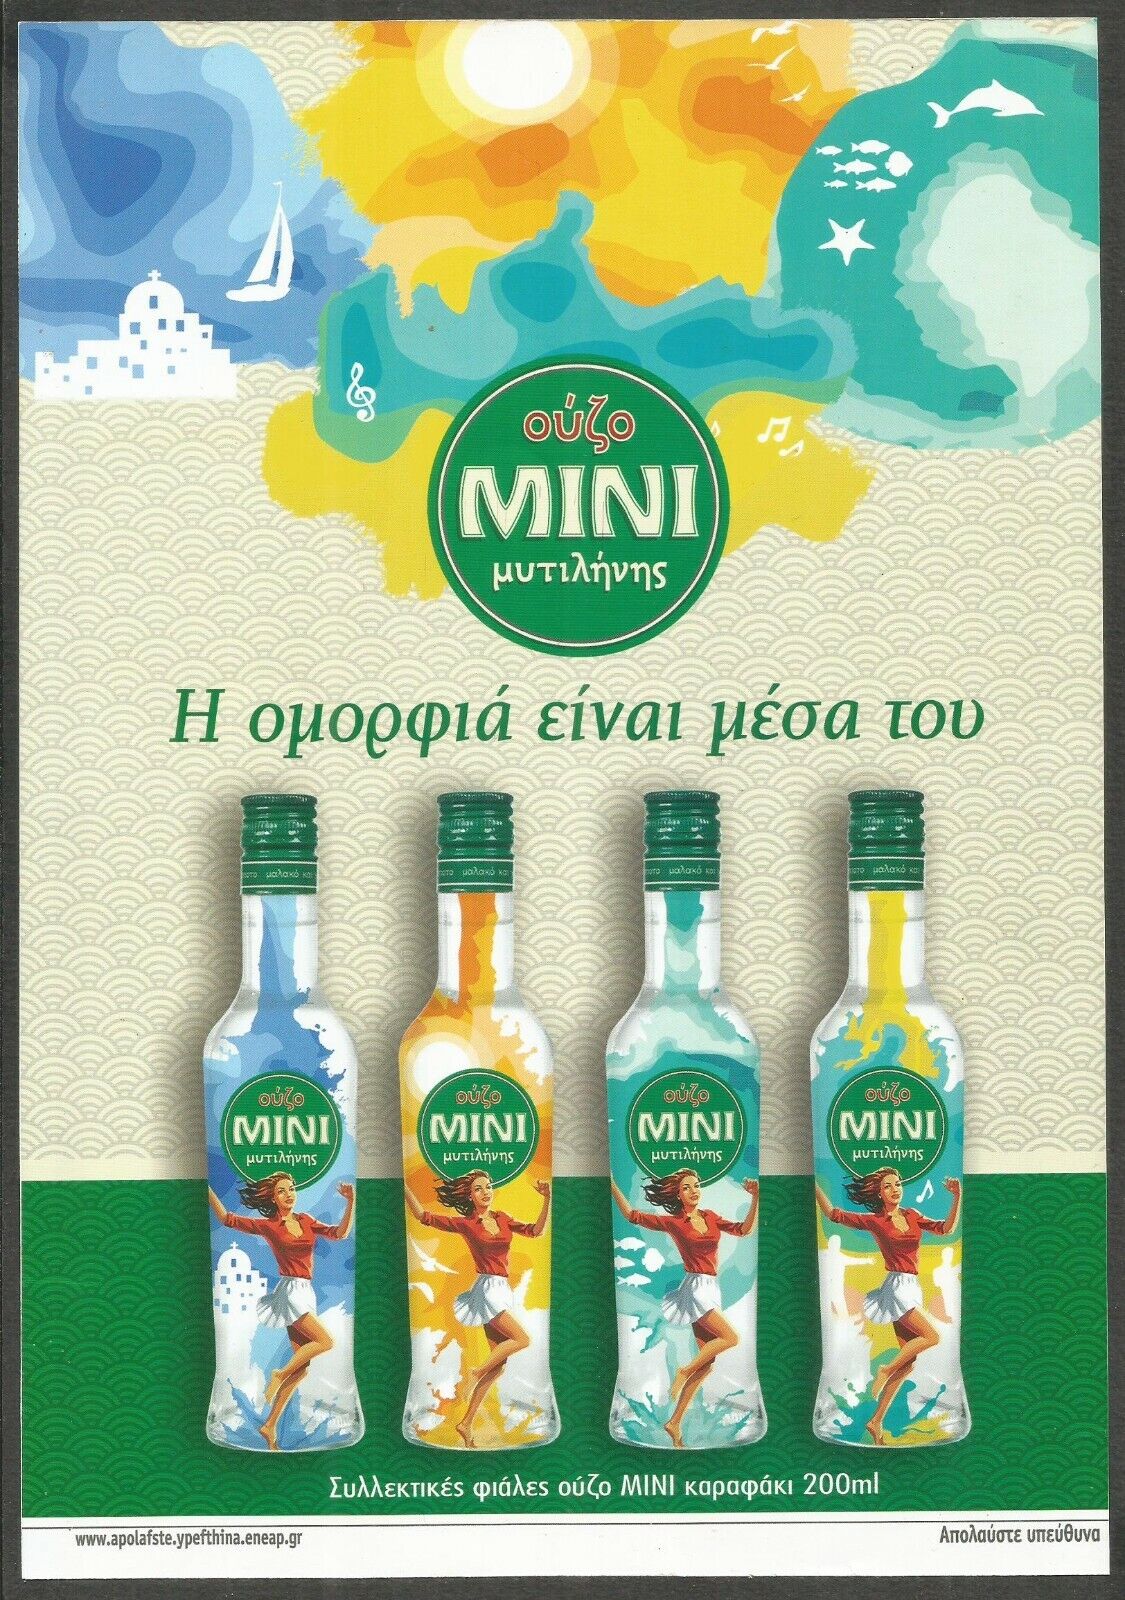 OUZO MINI of Mytilene, Lesbos Island -\'\'The Beauty is Inside\'\'- 2012 Print Ad